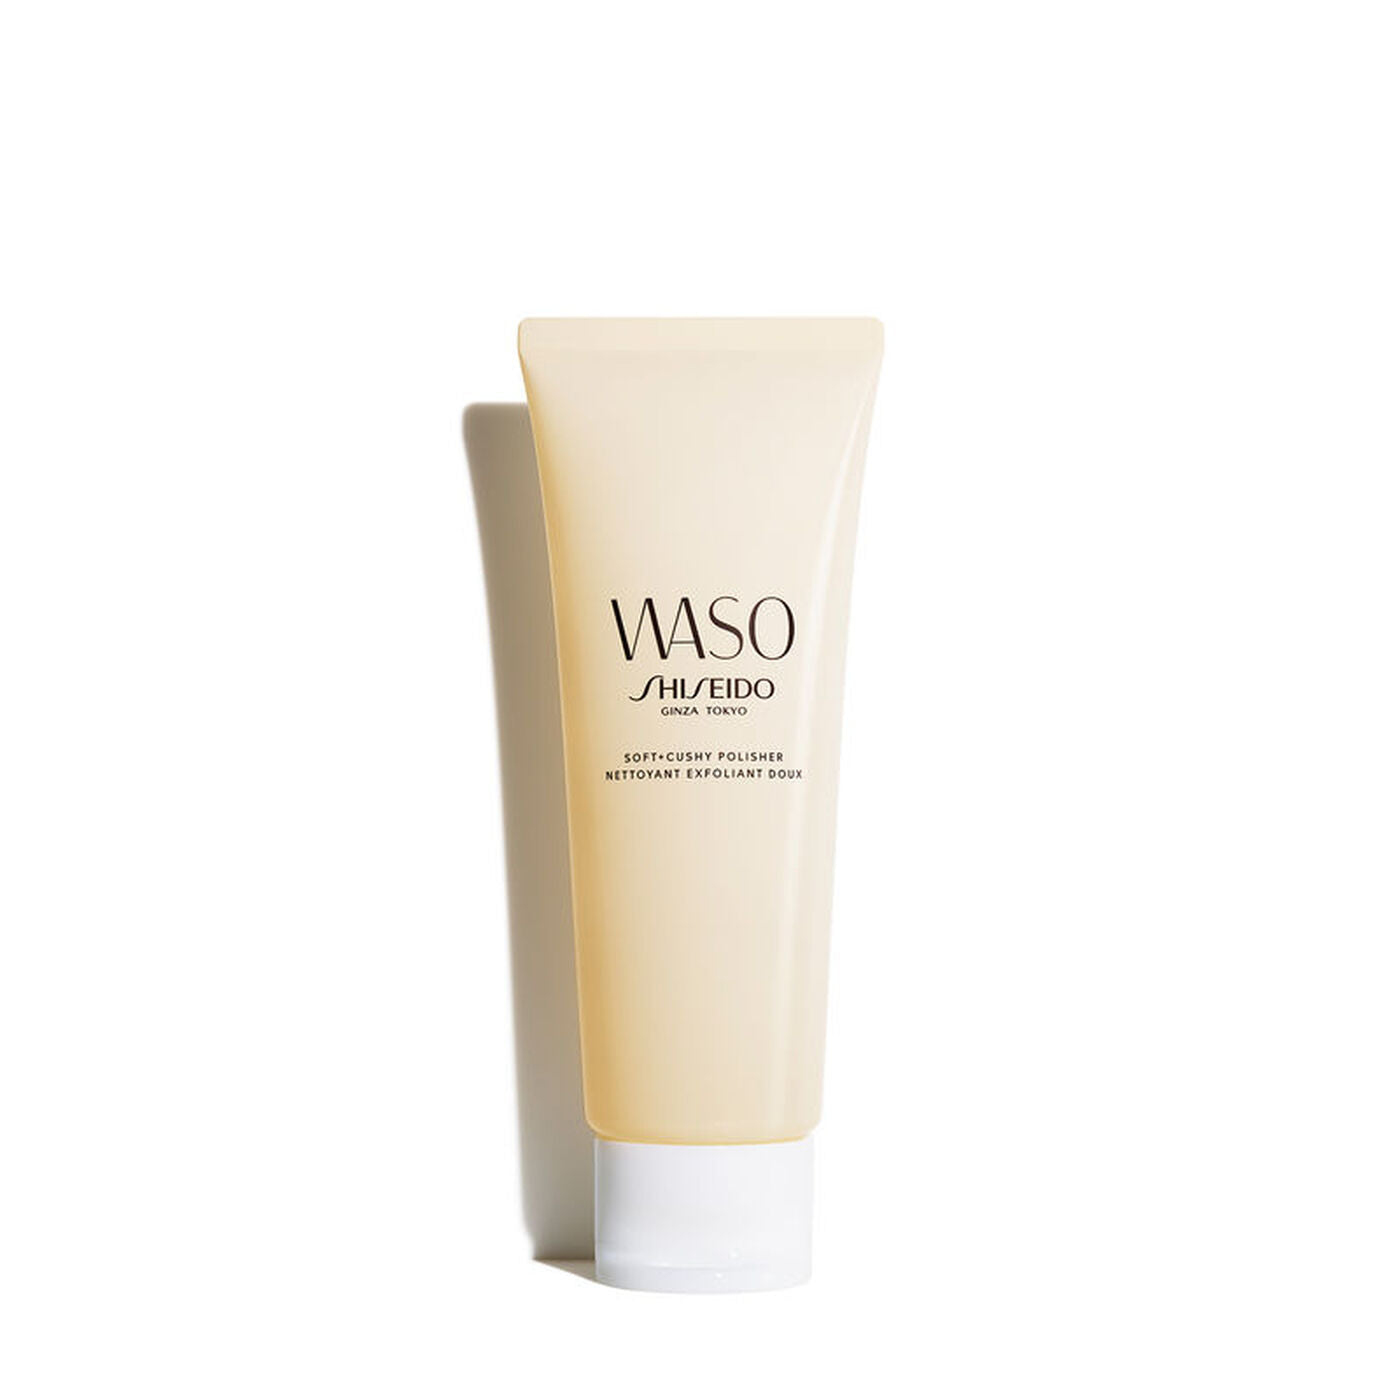 Waso Soft + Cushy Polisher 75 Ml Sealed Testers